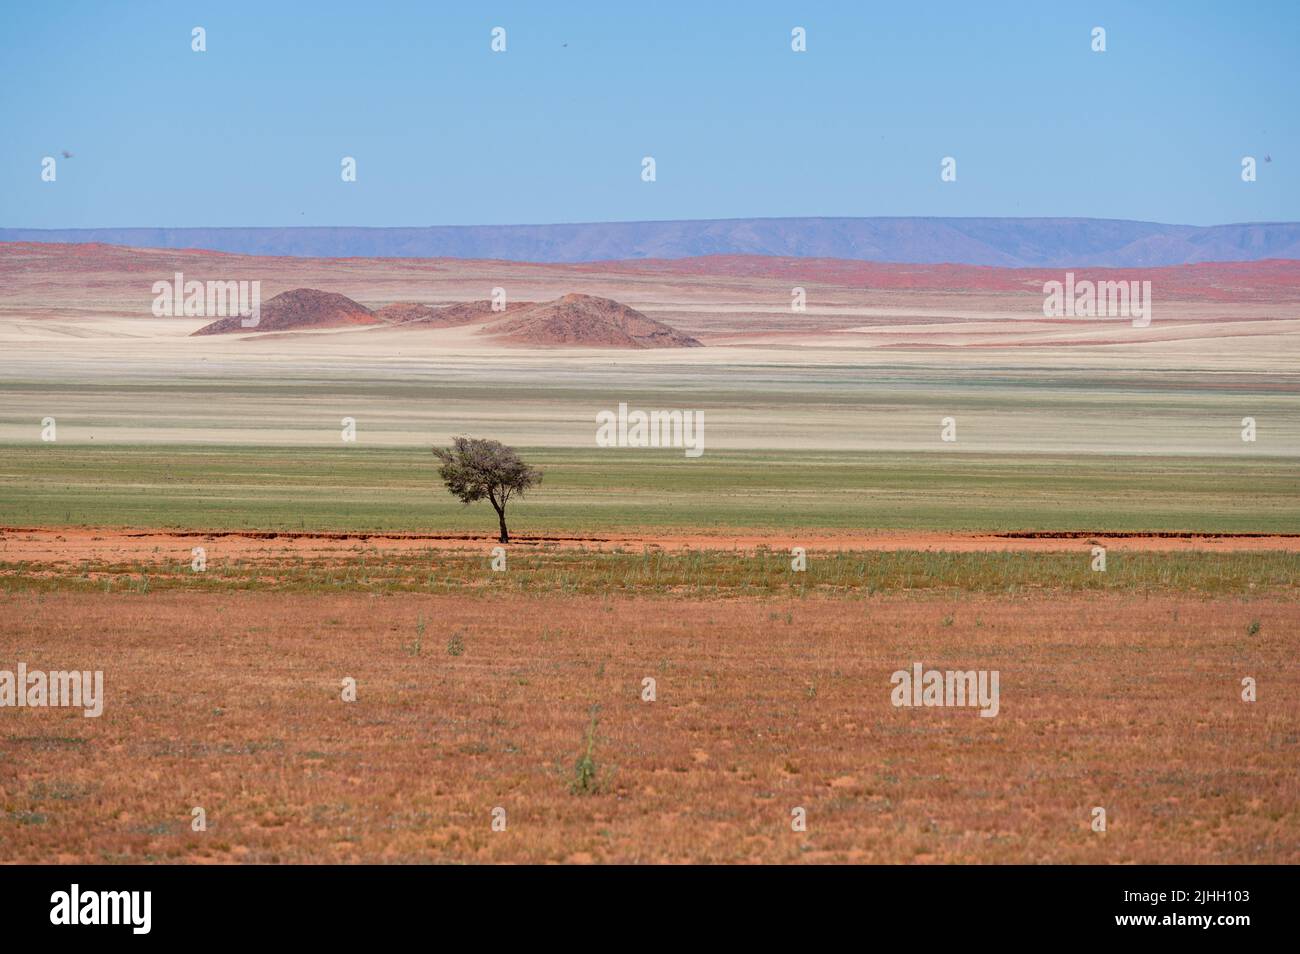 Sand dunes covered in scrub in Kalahari Desert, Namibia Stock Photo